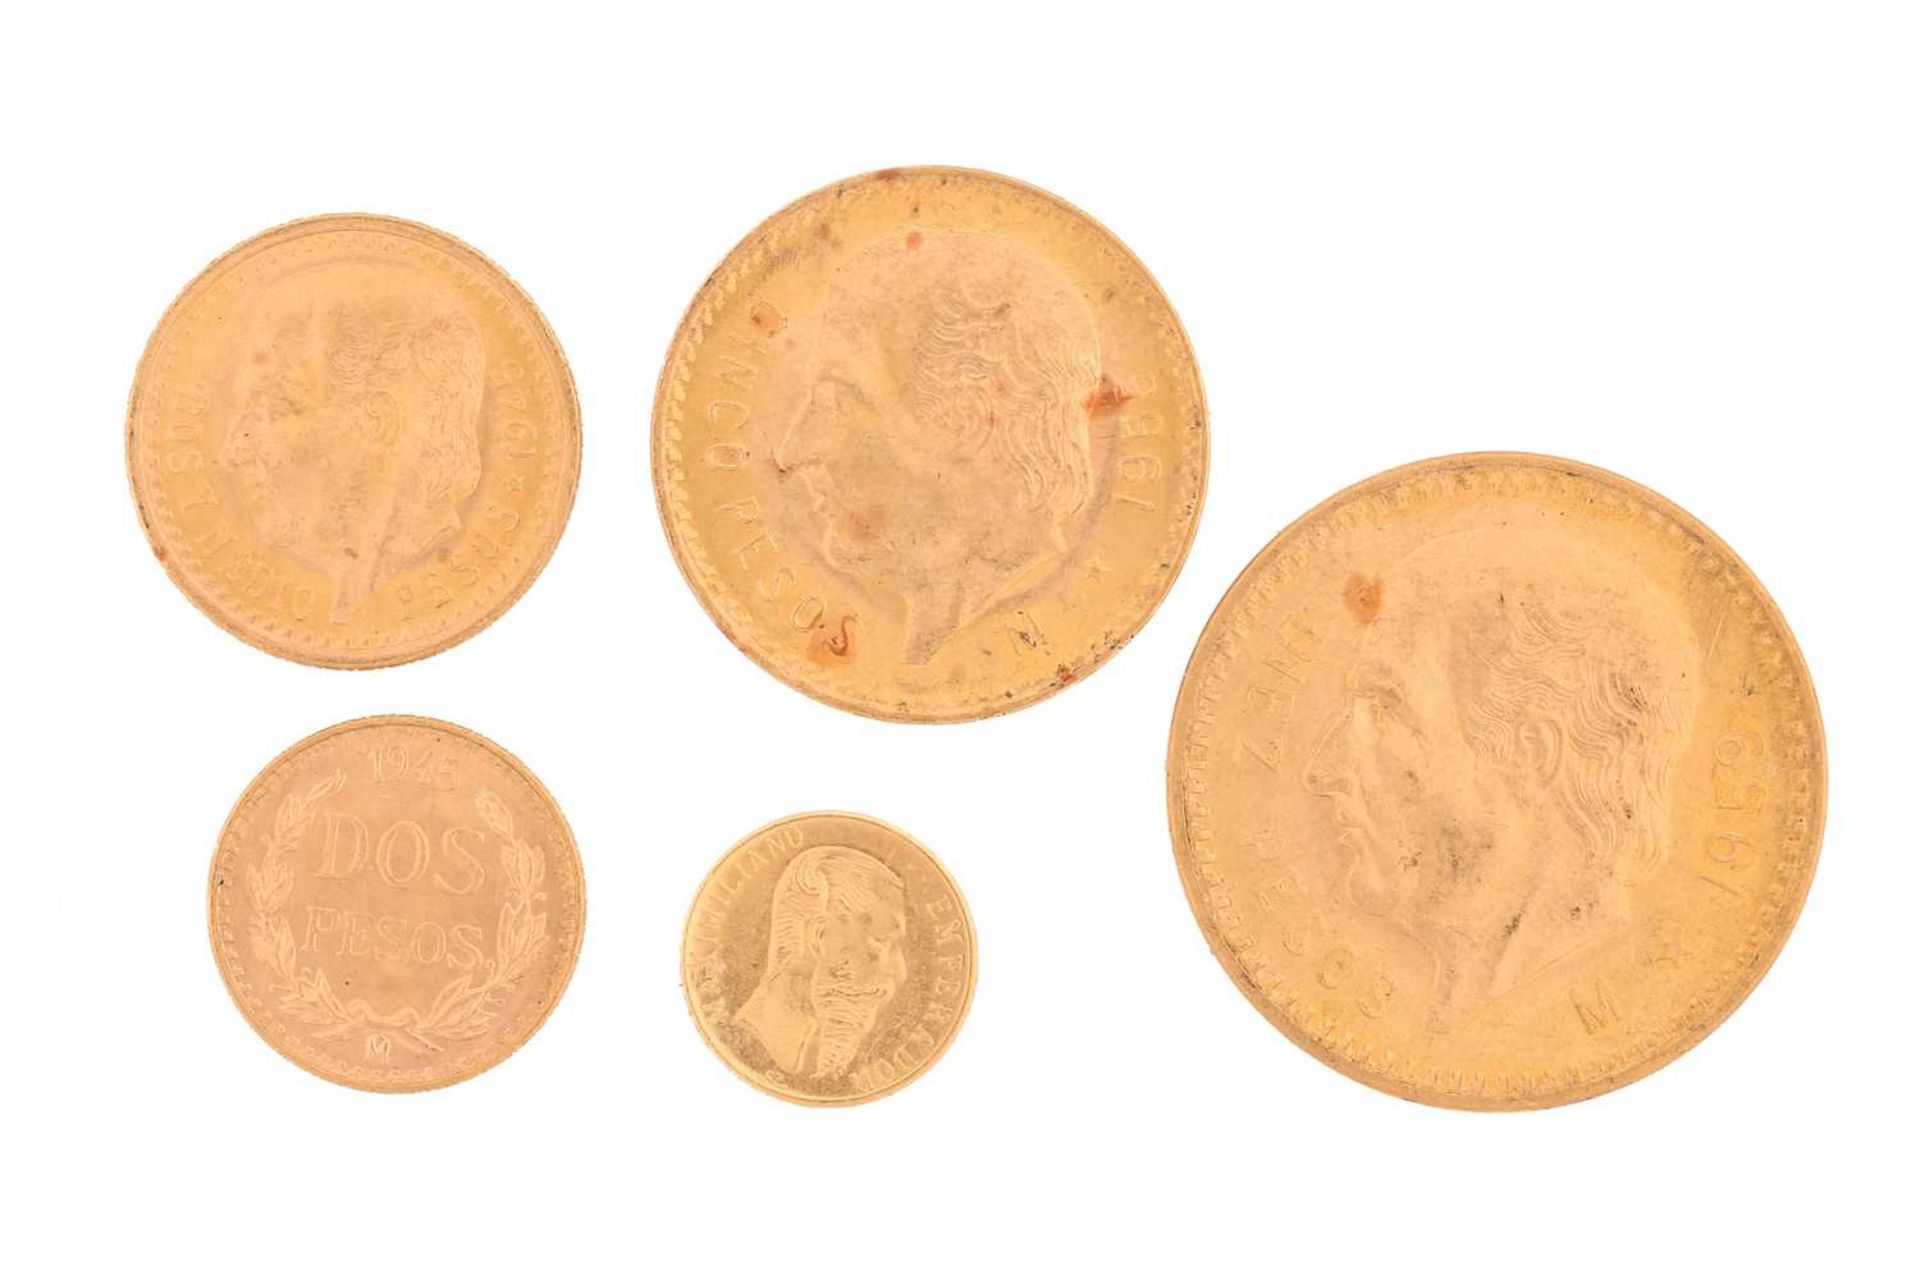 Mexico - gold coins, comprising Diez pesos 1959, Cinco pesos 1955, Dos y Medio pesos & Dos pesos,